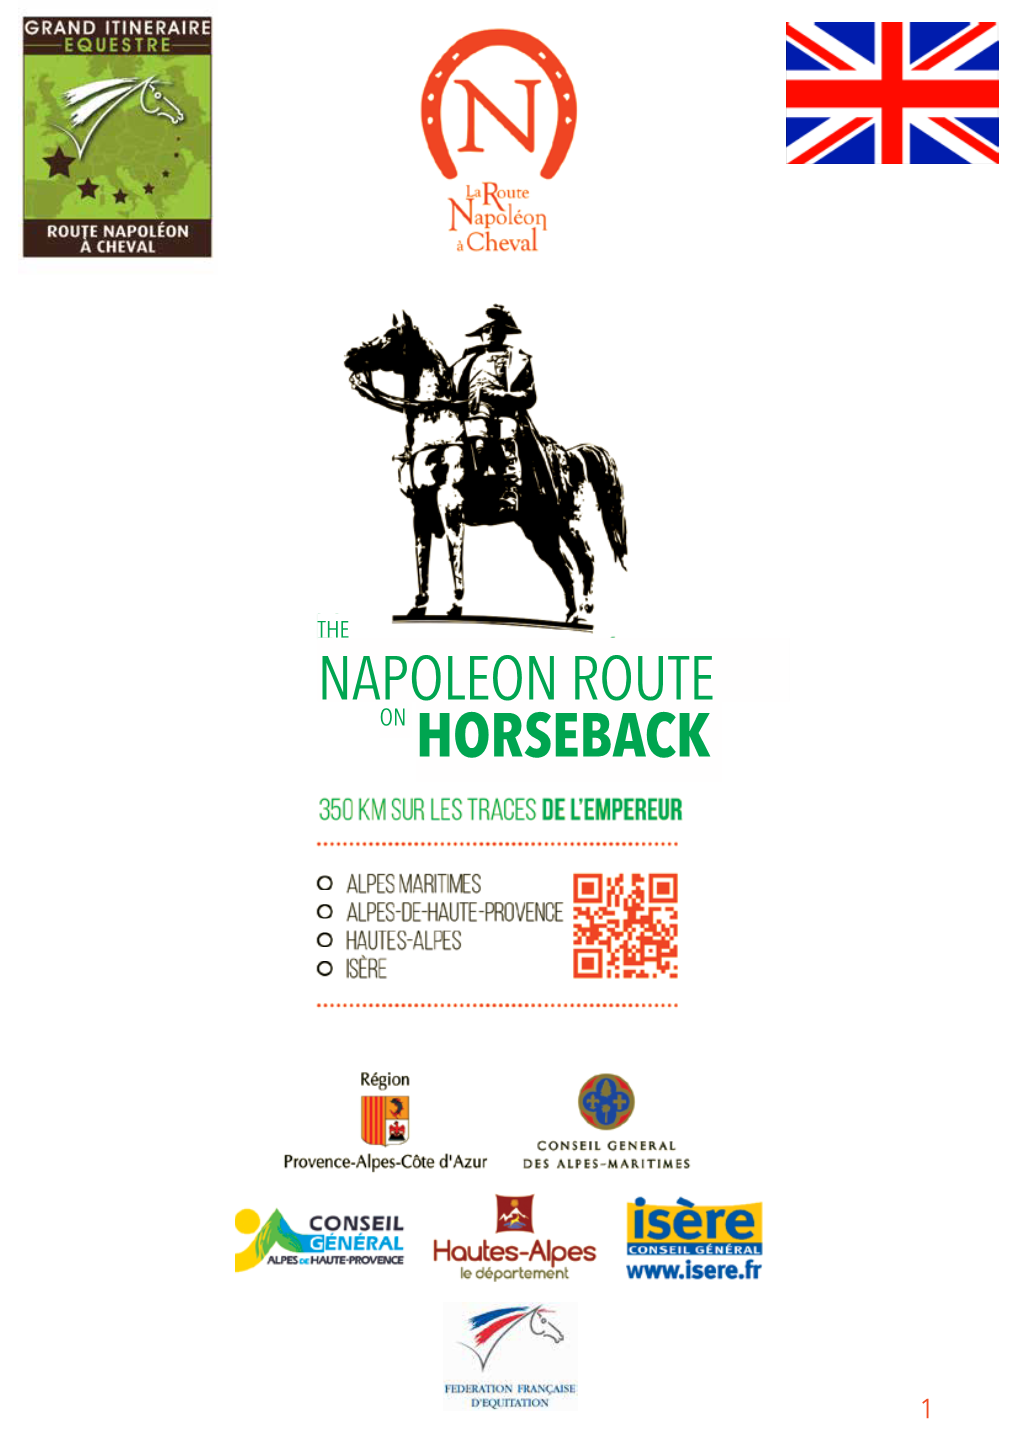 On Horseback Napoleon Route